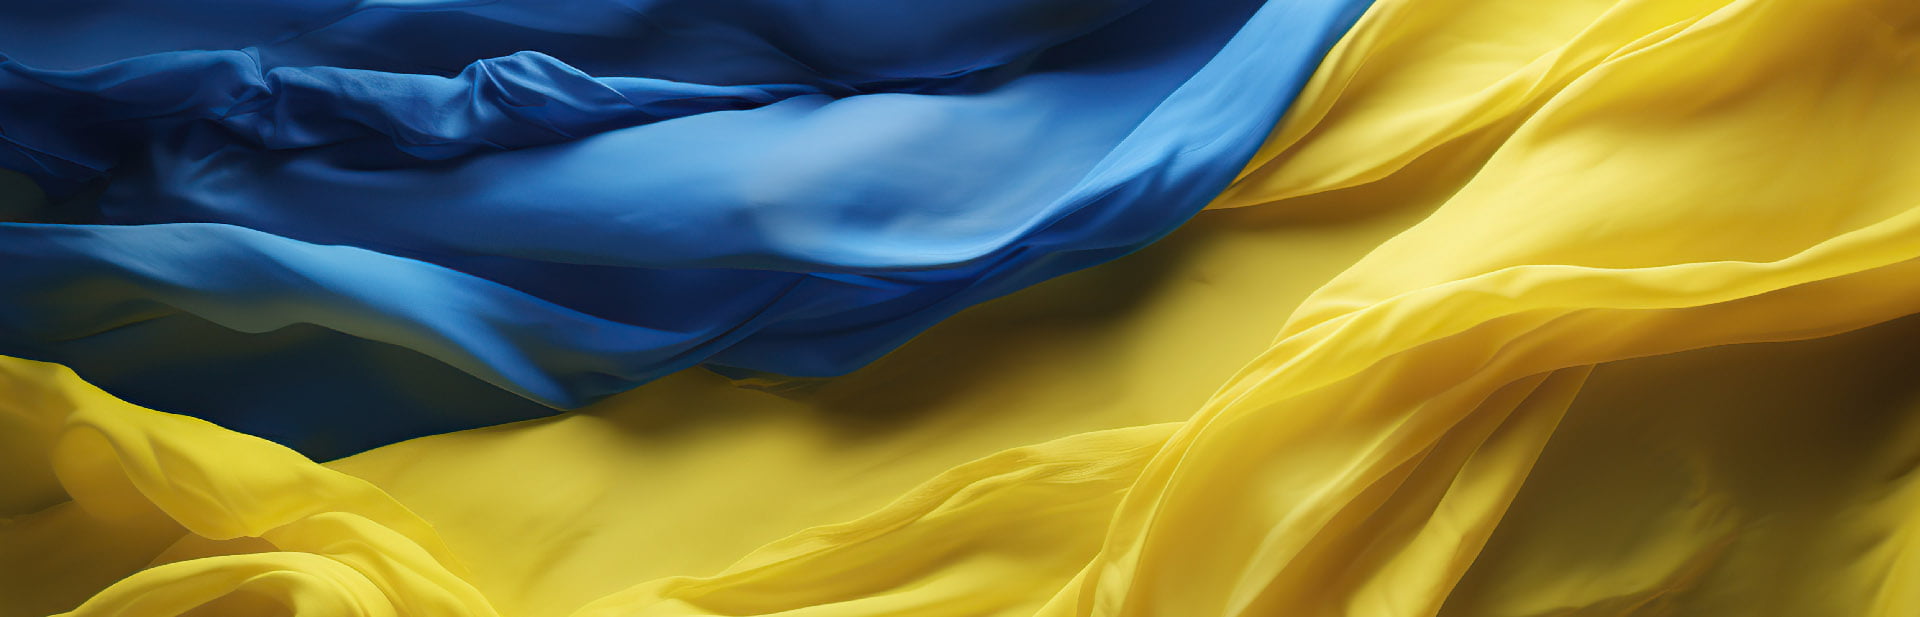 ukraine flag background1920